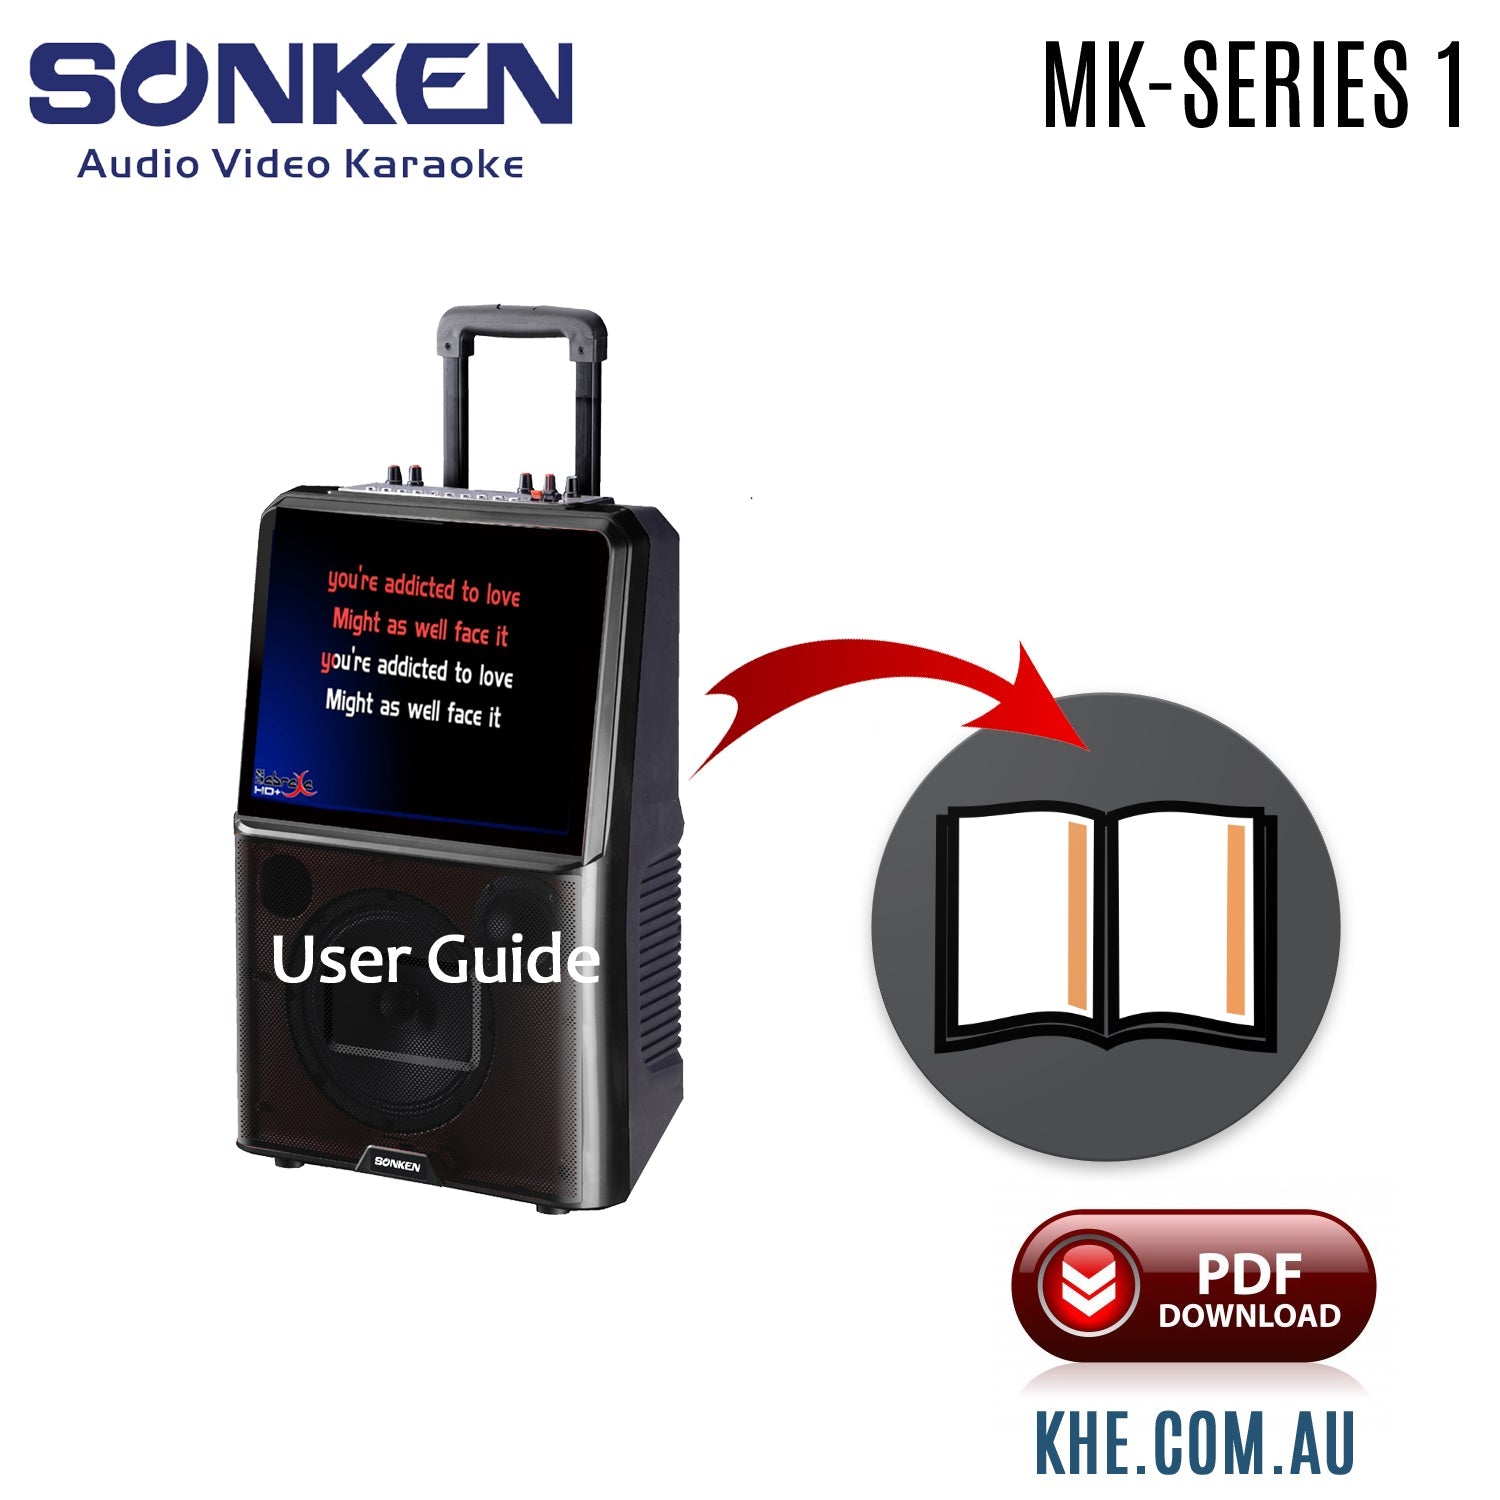 How To Connect Guide - Sonken Max Karaoke Series 1 - Karaoke Home Entertainment